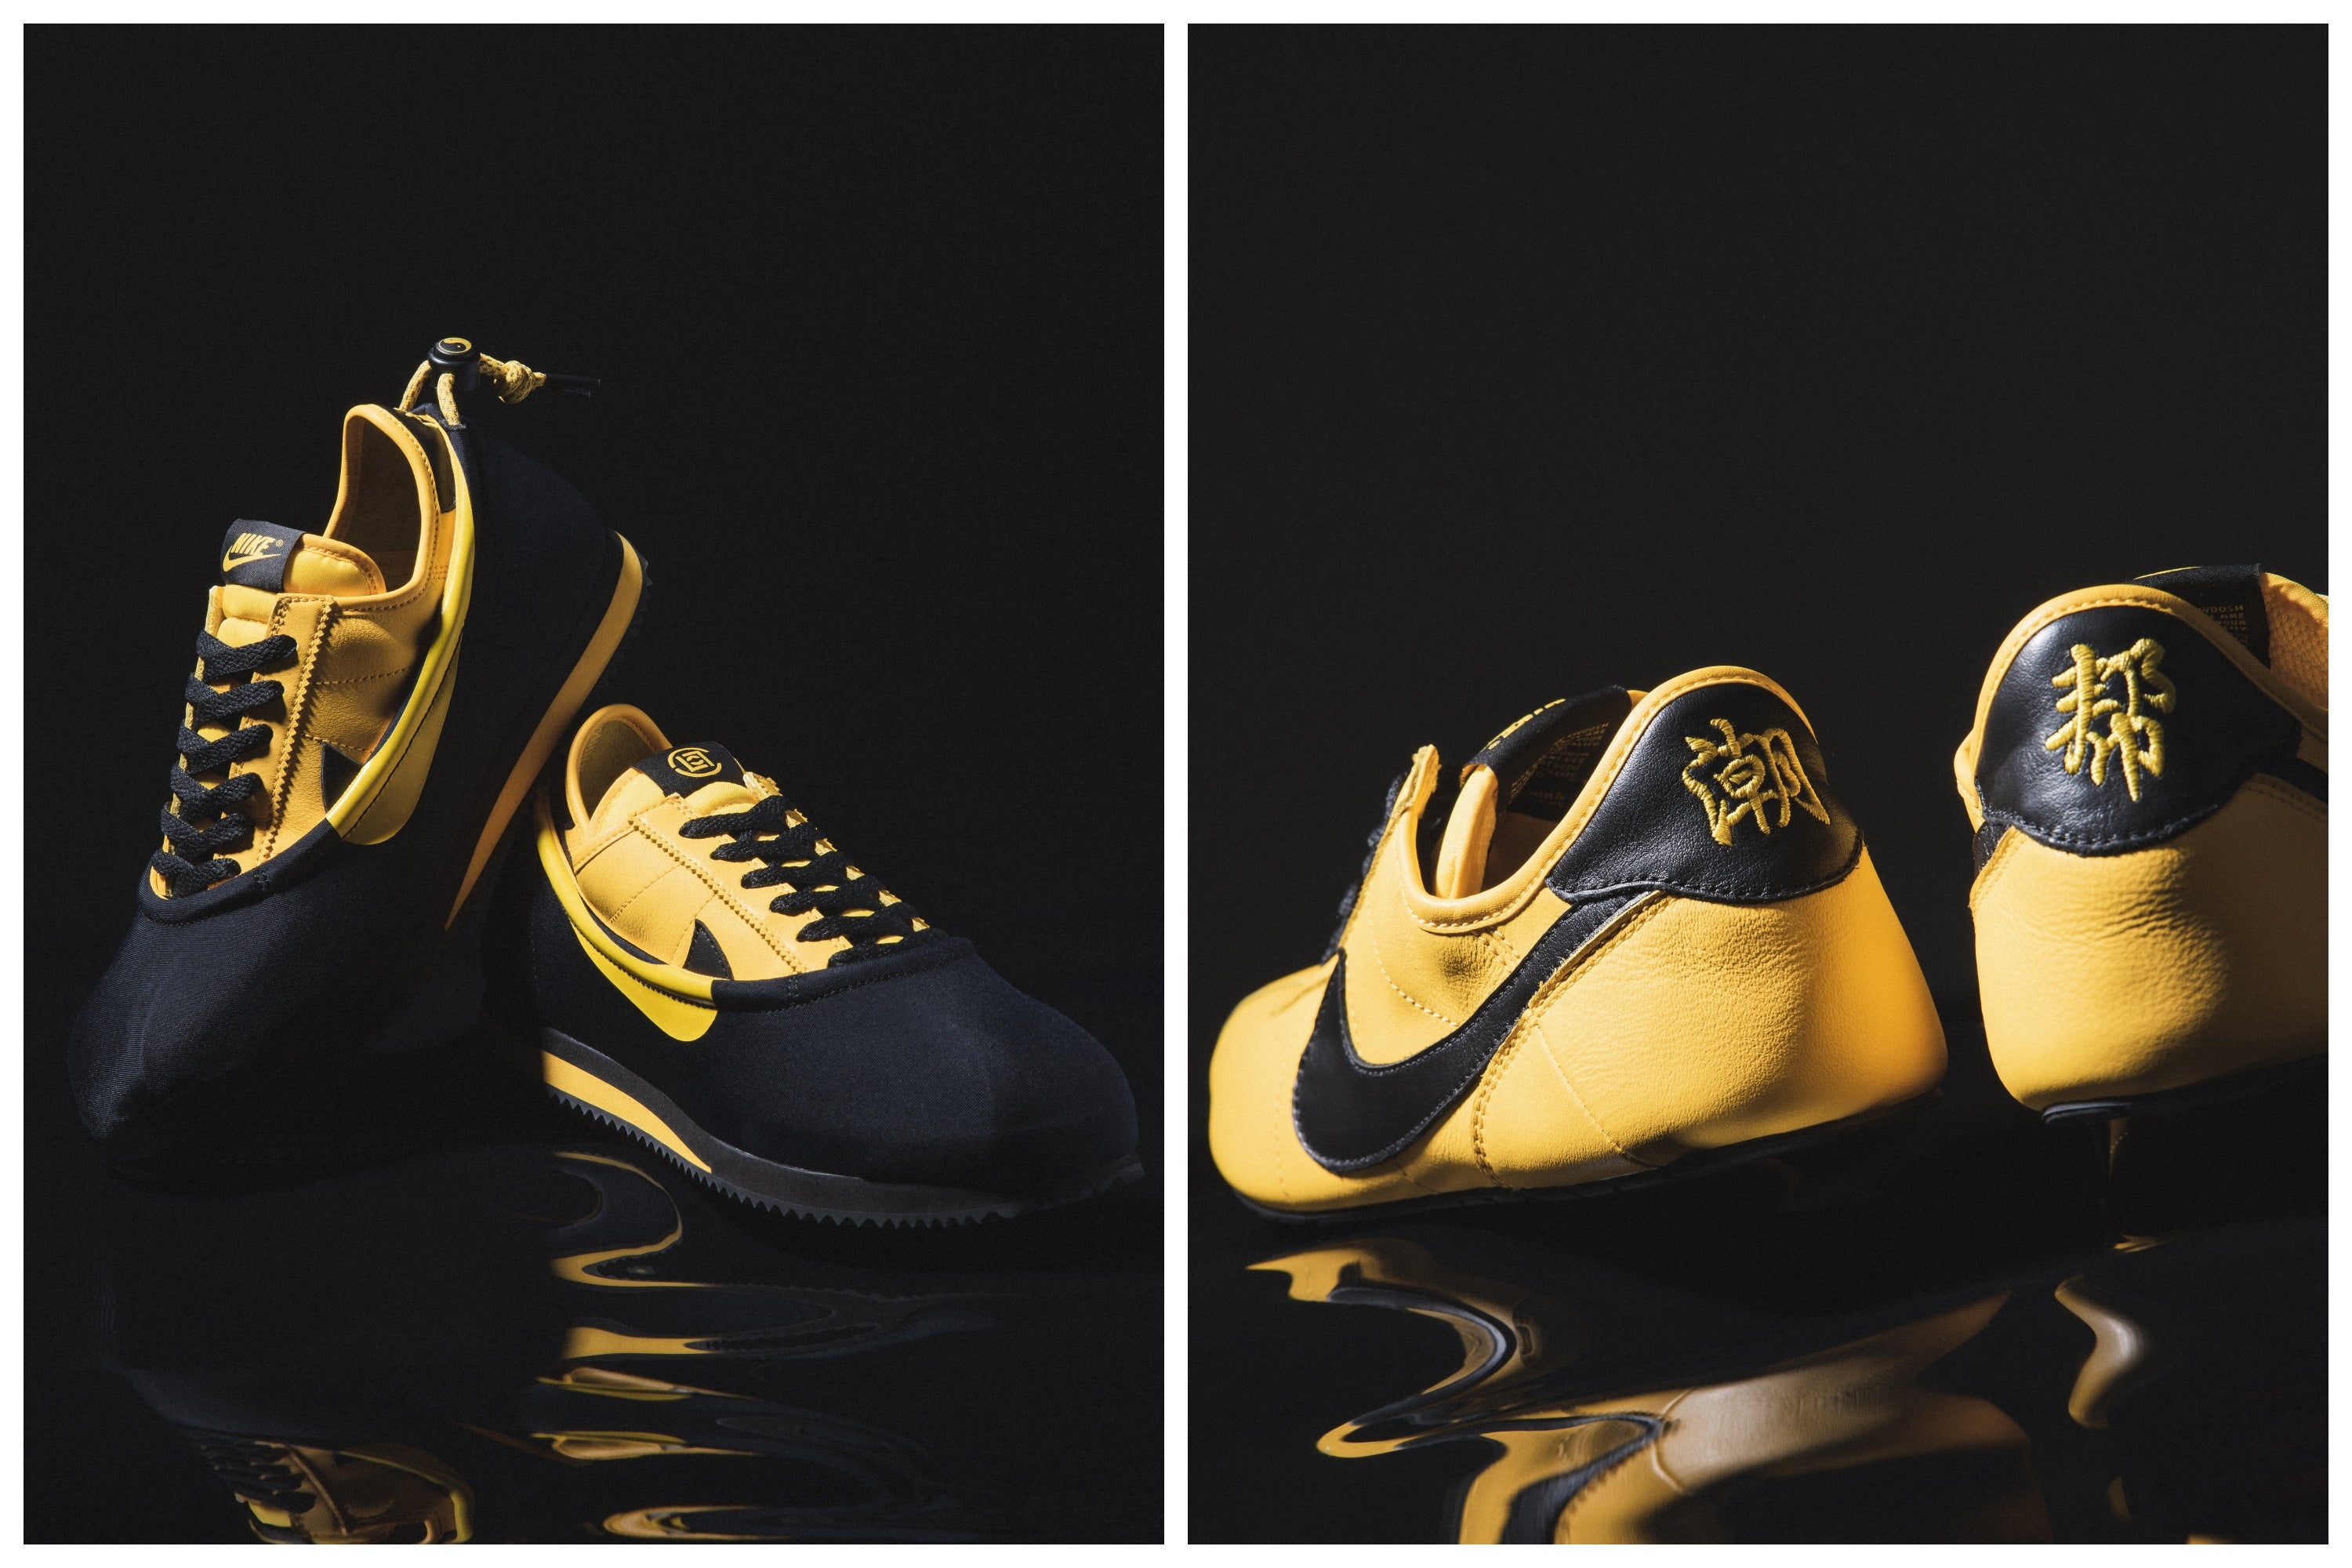 CLOT x Nike "CLOTEZ" - yellow and black